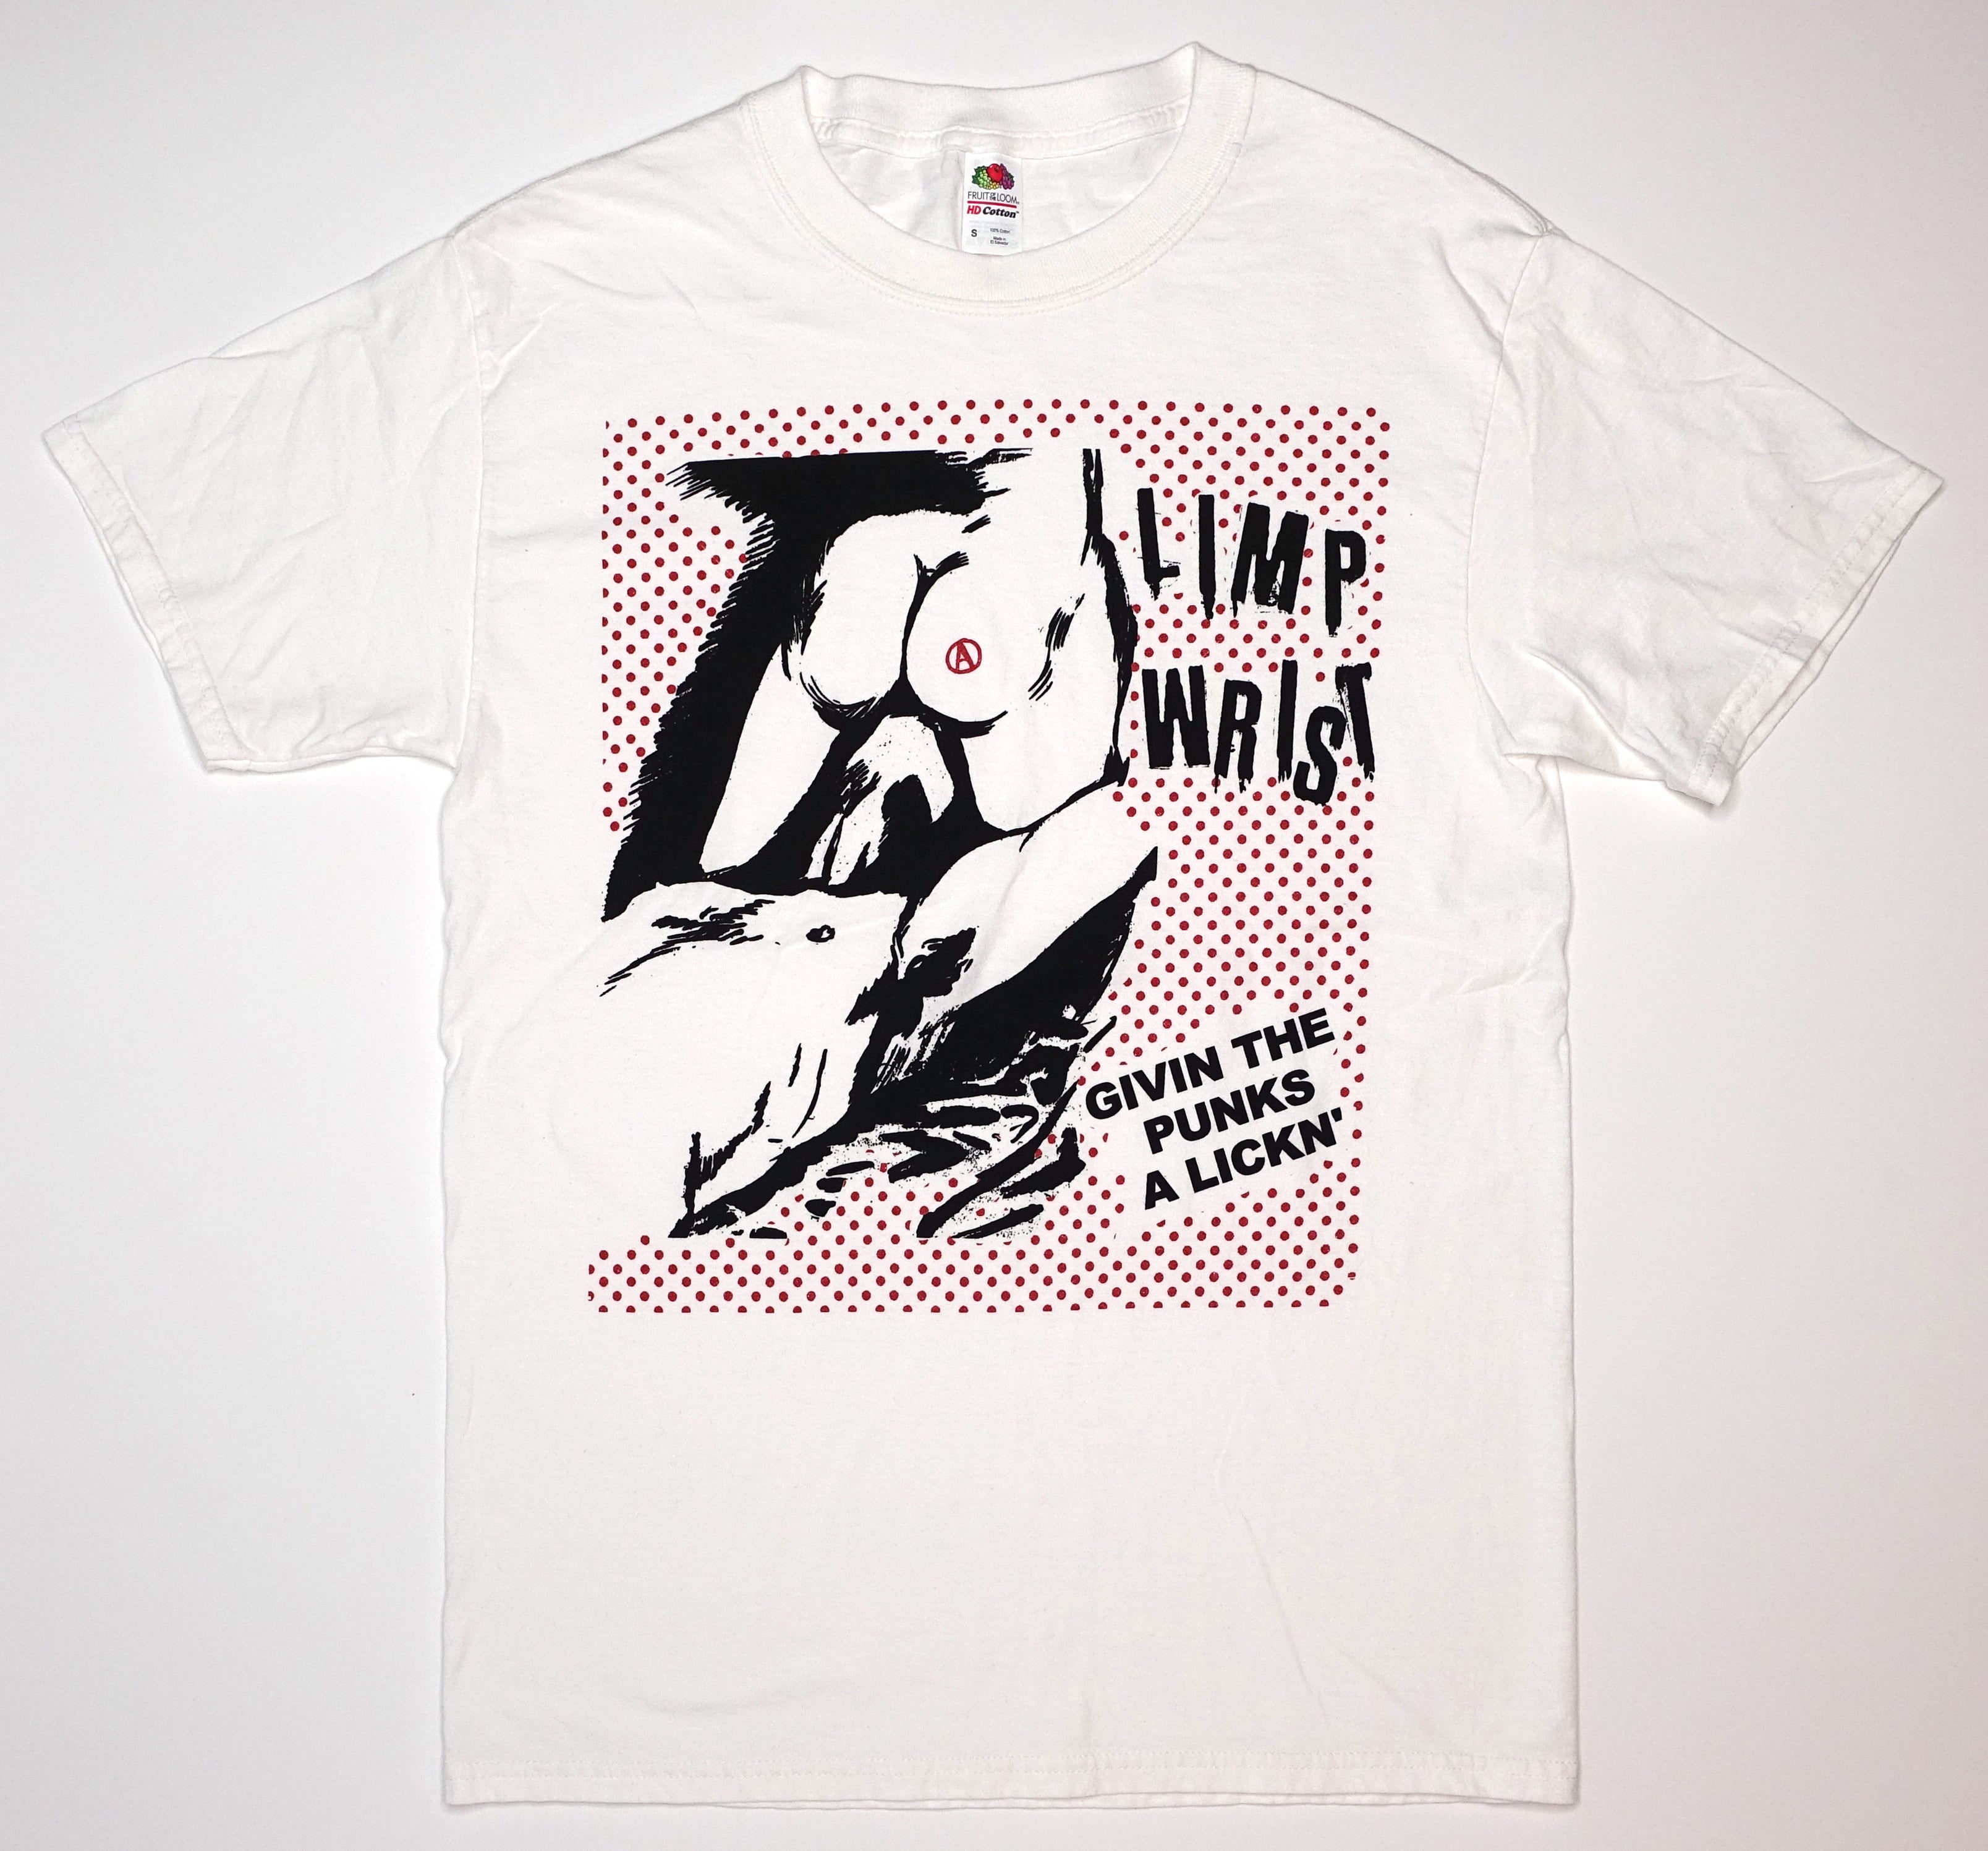 Limp Wrist – Given the Punks A Lickin' 2017 Tour Shirt Size Small